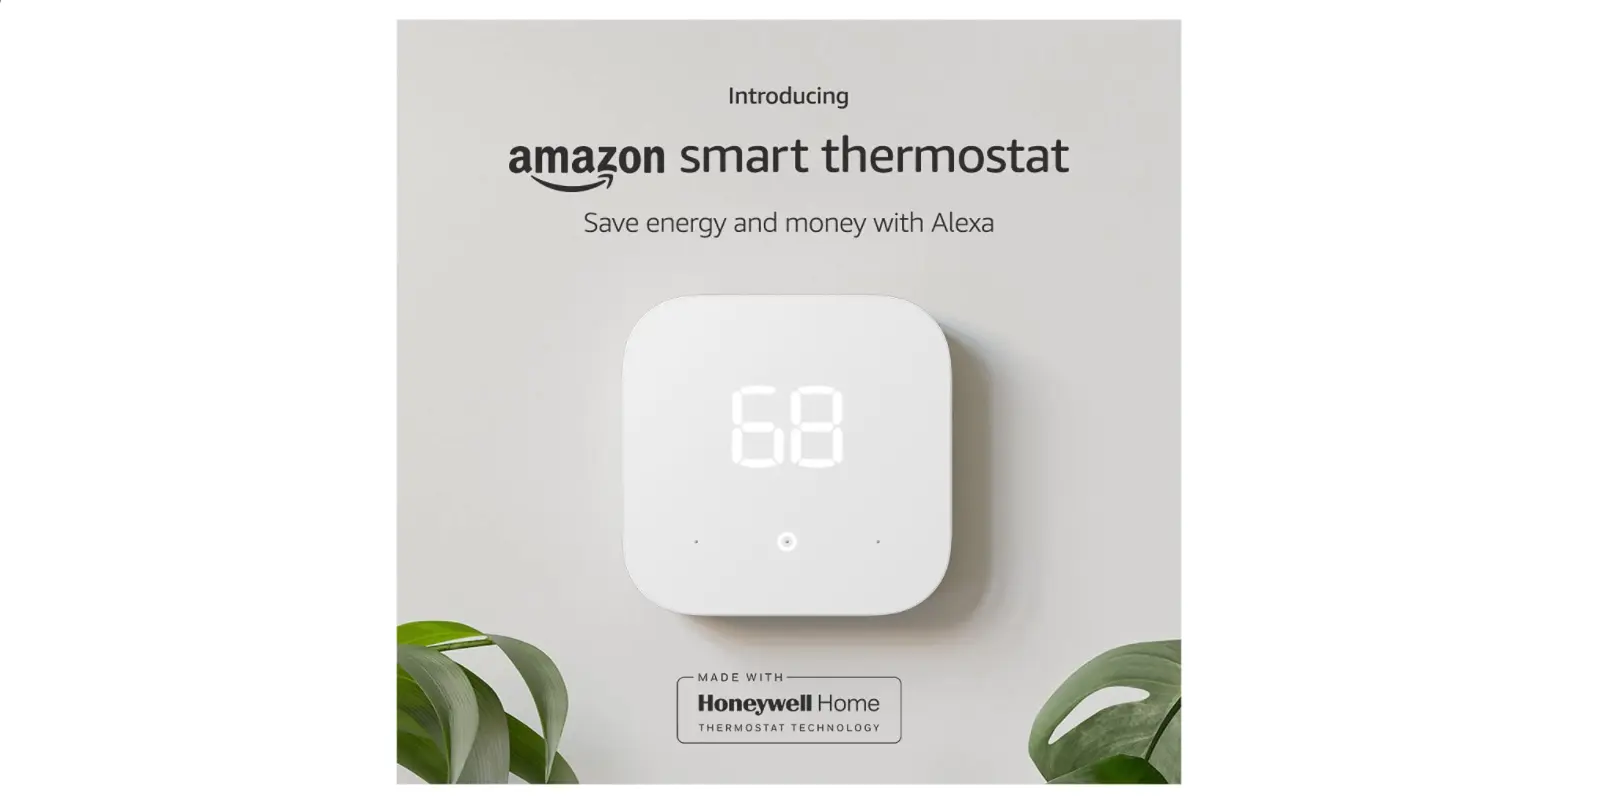 Amazon - Amazon Smart Thermostat